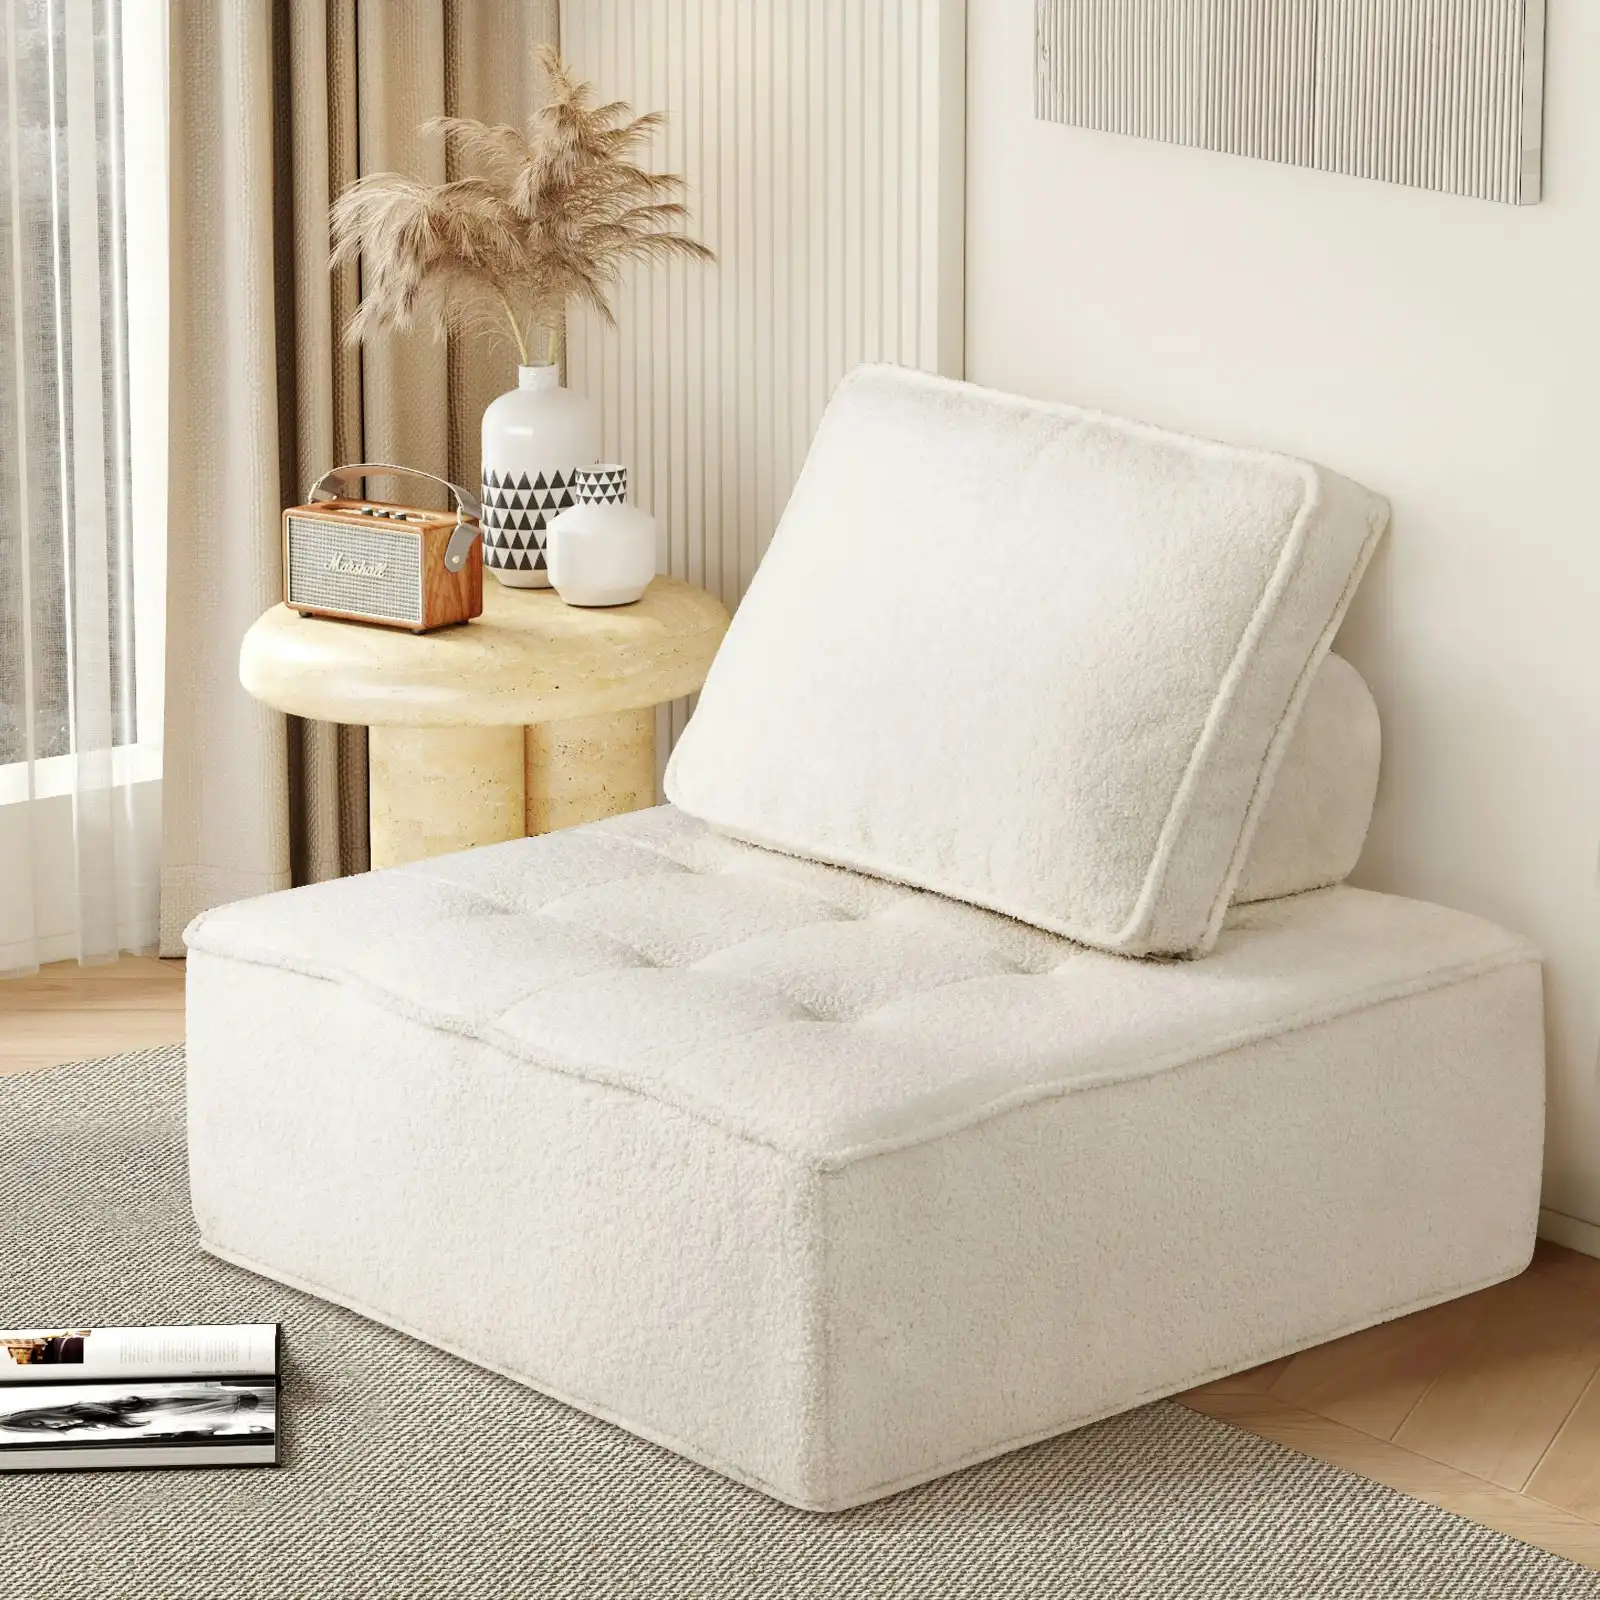 Oikiture Modular Sofa Lounge Chair Armless Adjustable Back Cushion Sherpa White